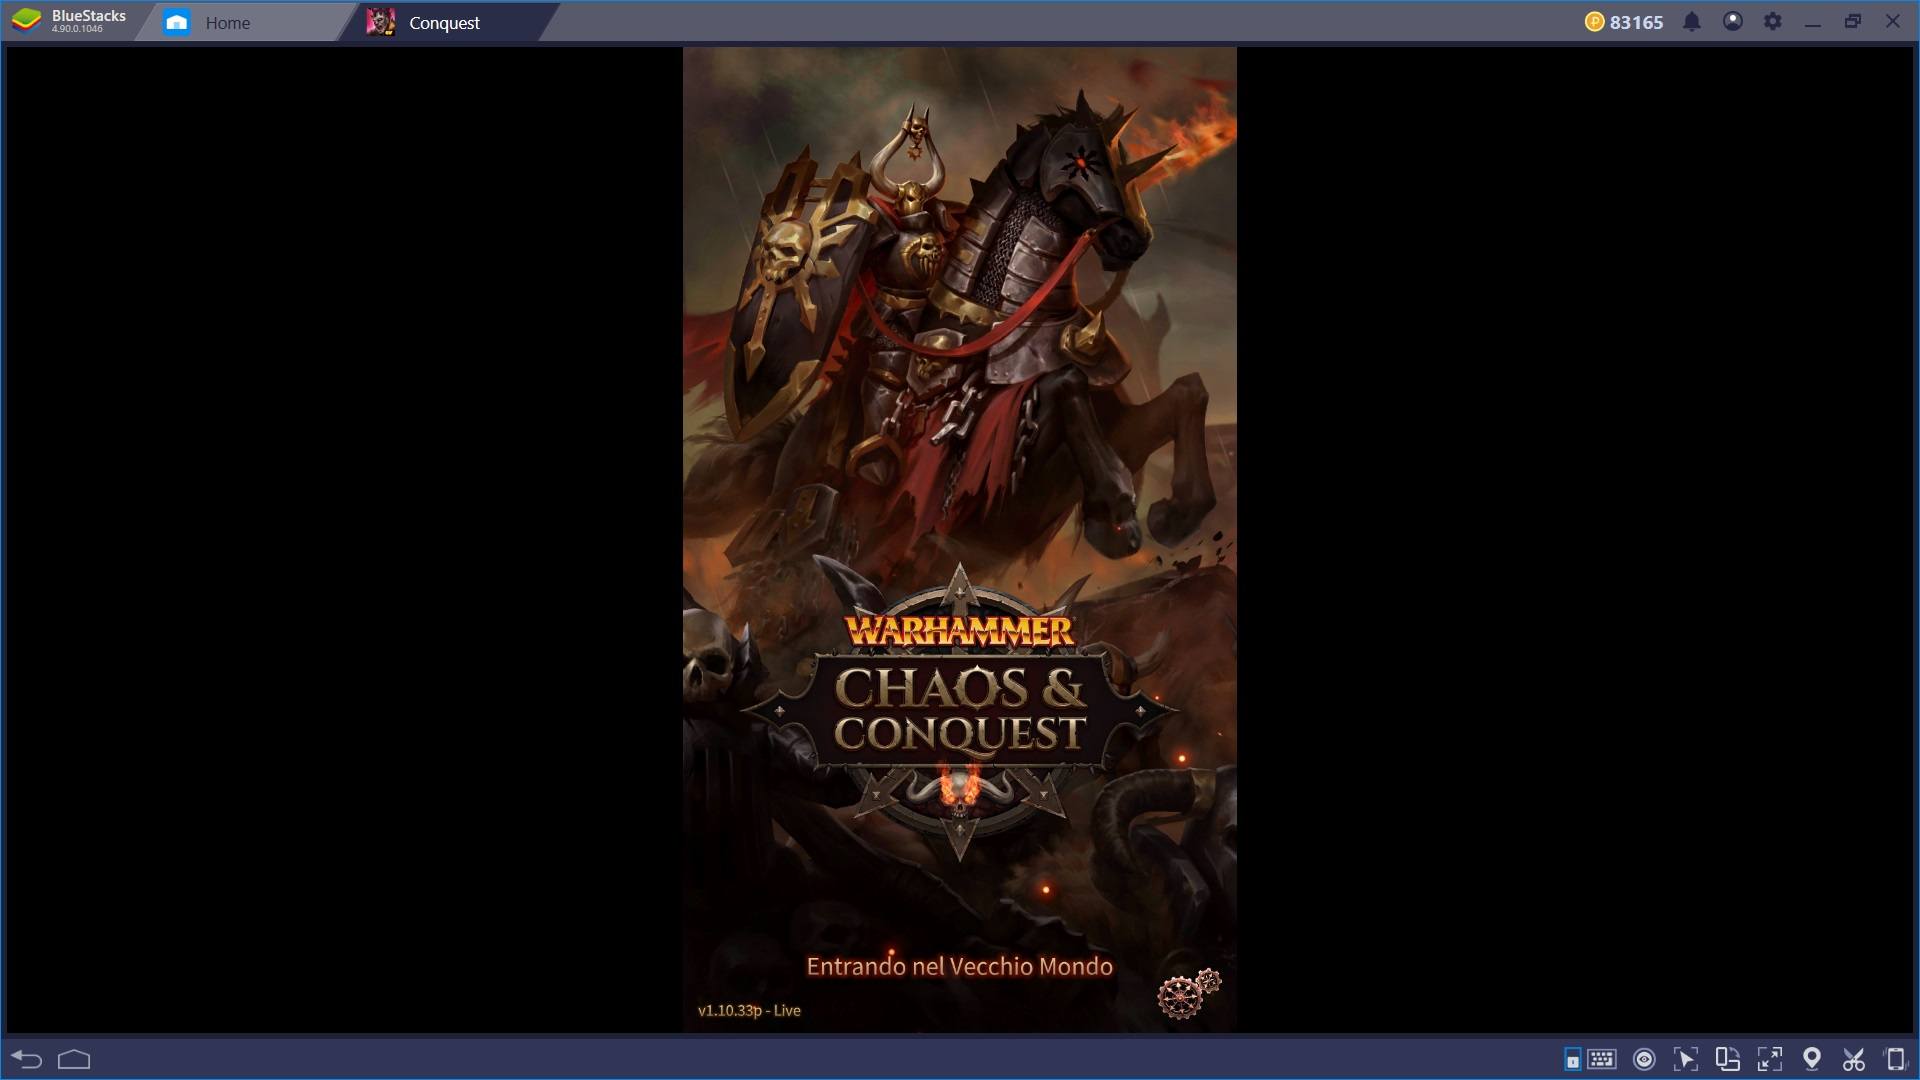 Gioca Warhammer Chaos & Conquest con Bluestacks 4